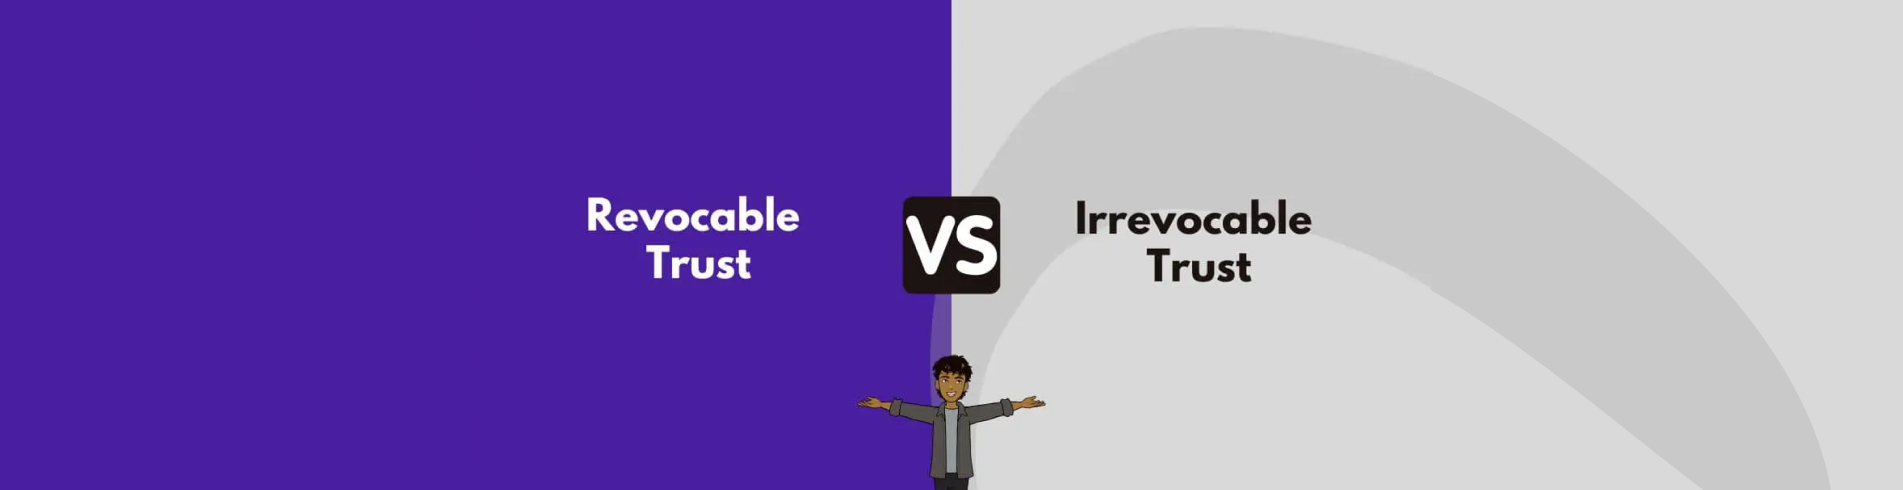 revocable trust vs irrevocable trust